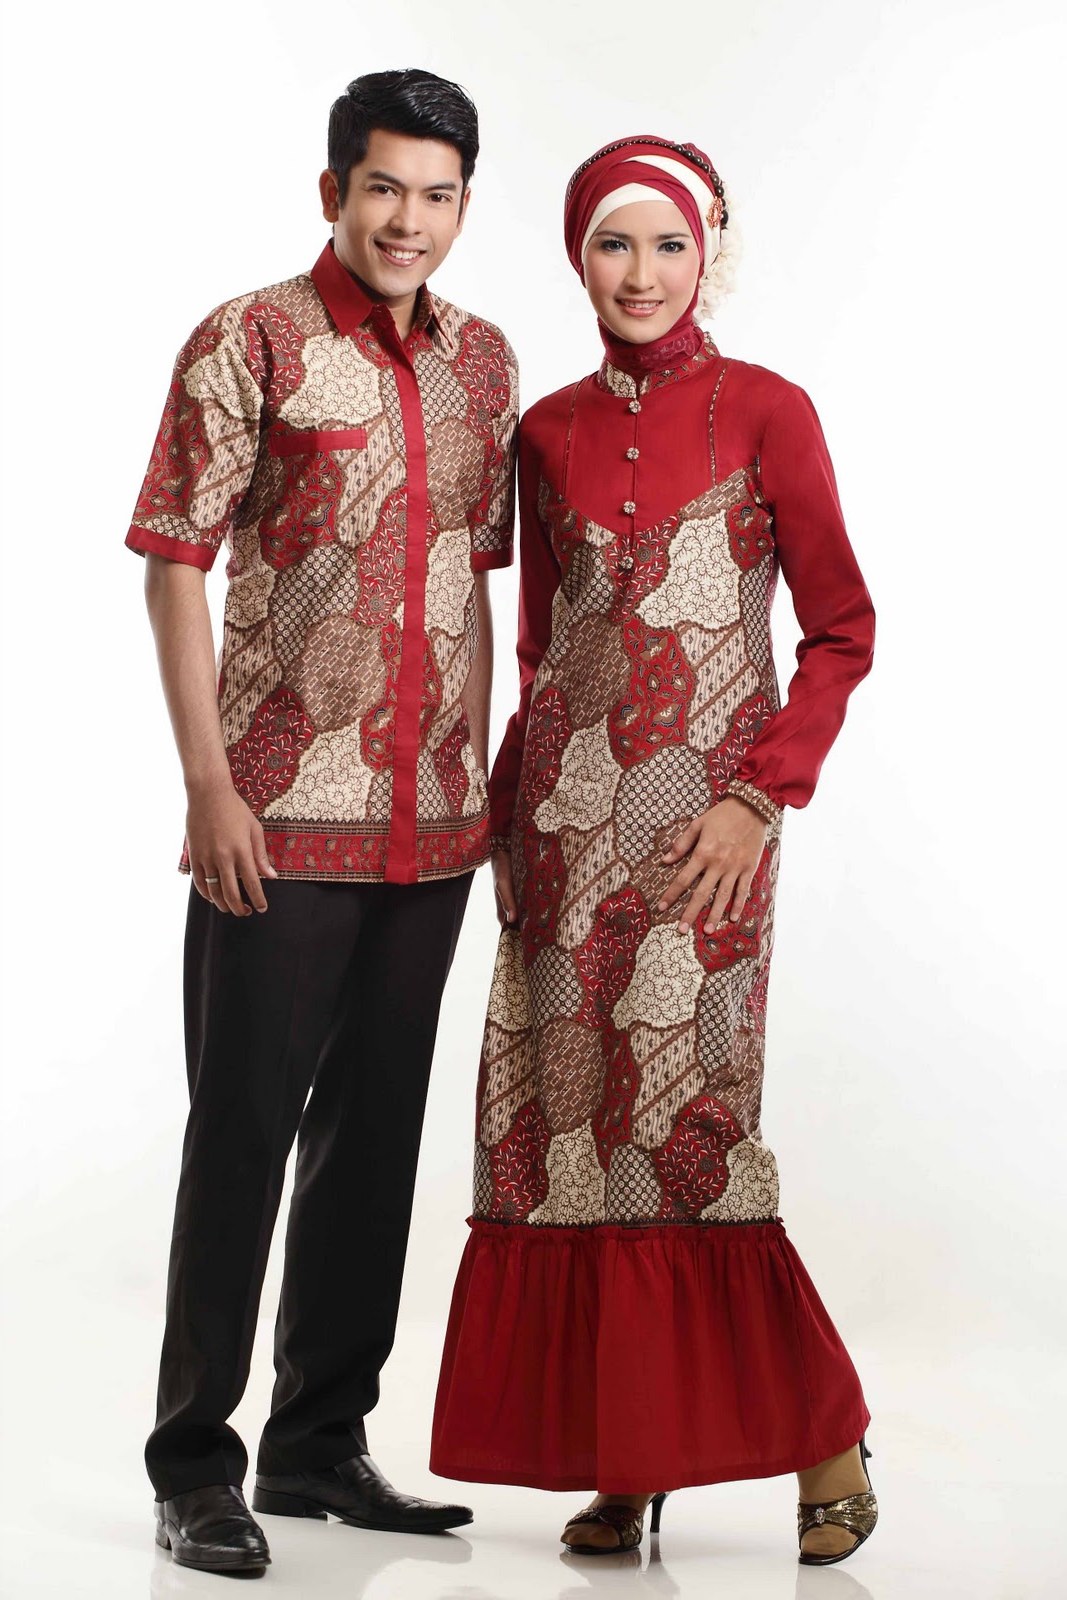 Design Gambar Baju Lebaran Gdd0 Bintang anda Trend Model Baju Batik Lebaran Terbaru 2013